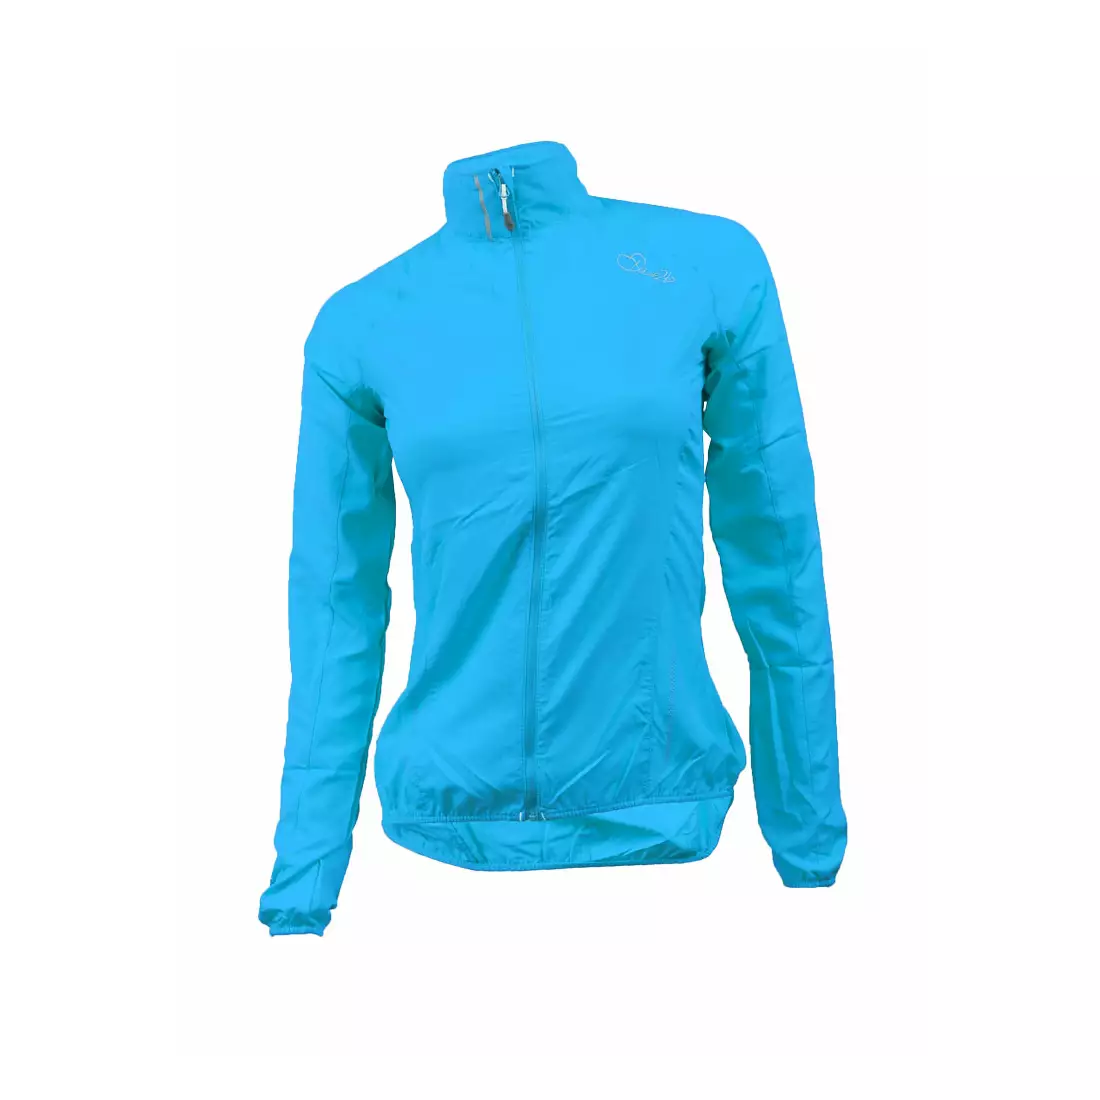 DARE2B Blighted Windshell Women's Cycling Windbreaker DWL106-5NN, Color: Blue